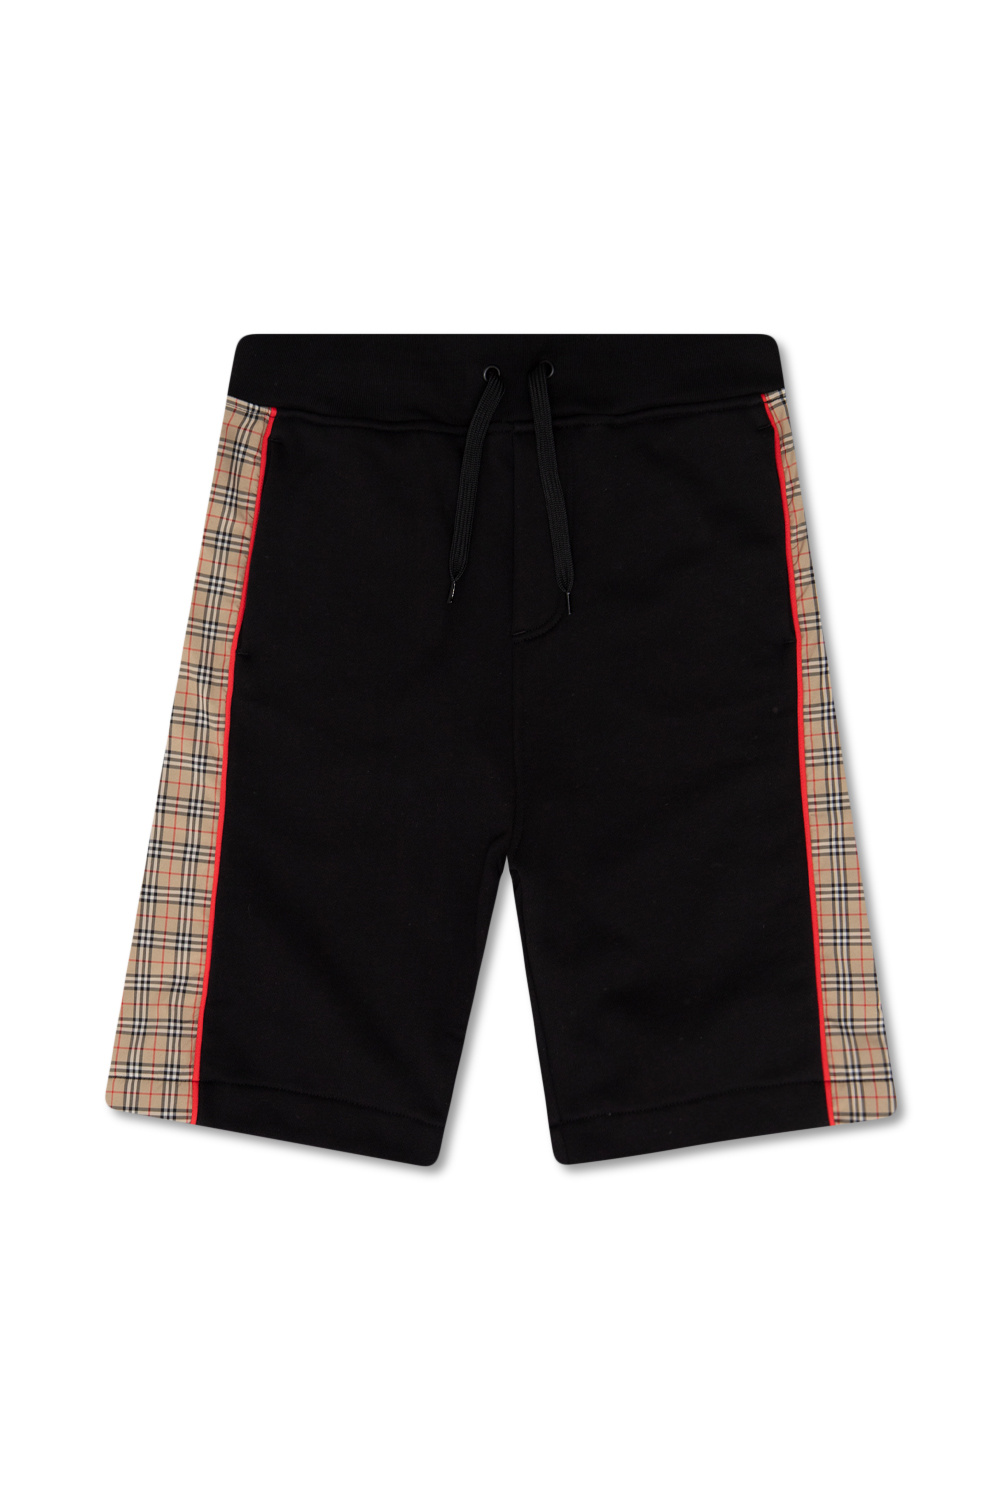 burberry POLO Kids ‘Jonah’ patterned shorts